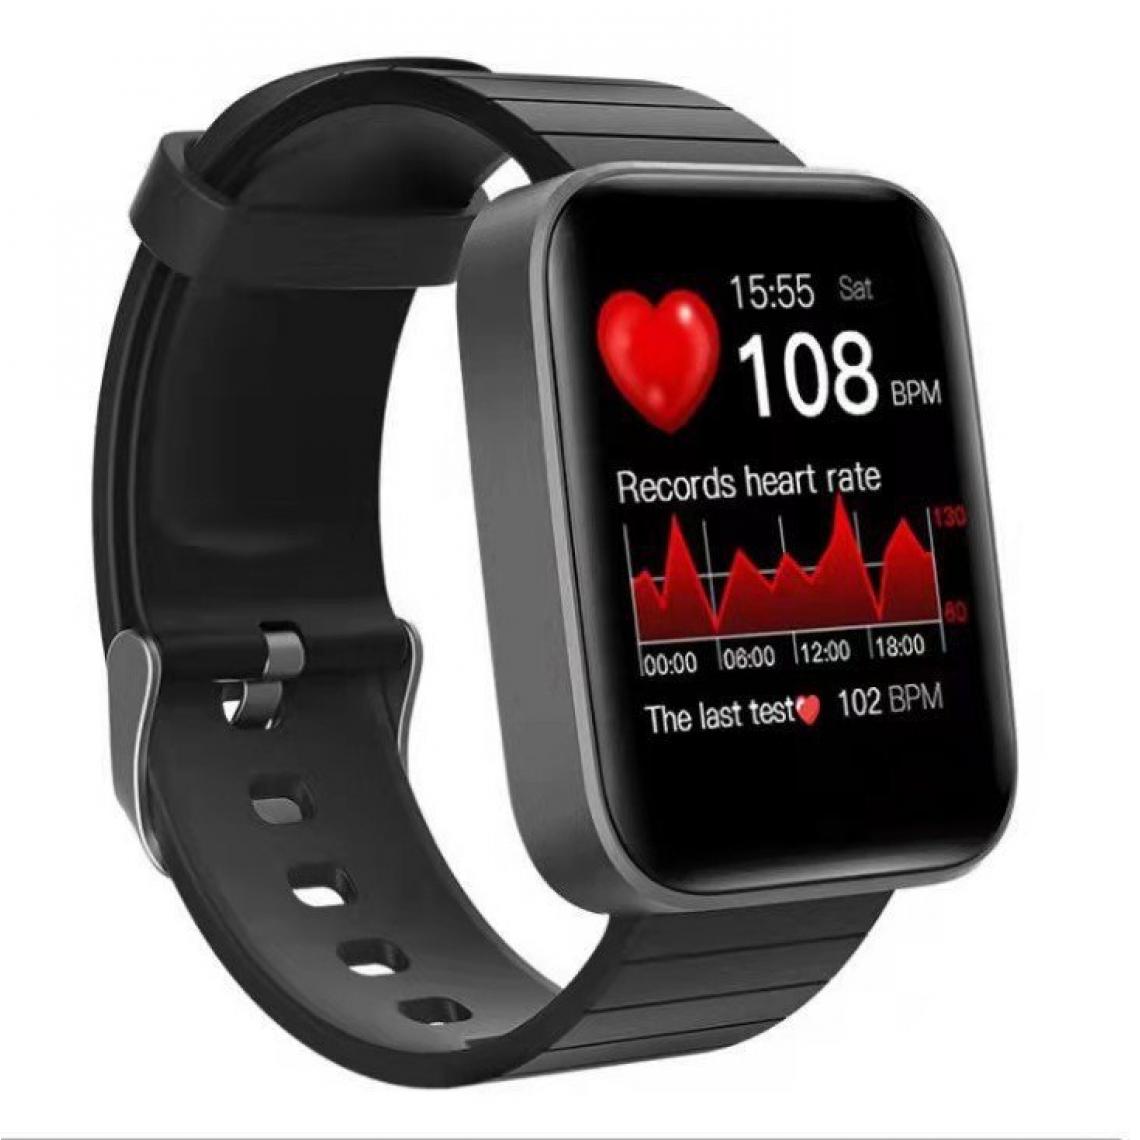 Chronotech Montres - Chronus Smart Watch 1.54 inch Full Touch Screen Smart Watch Flashlight Heart Rate Monitor Blood Pressure Sleep Monitor Fitness Tracker(black) - Montre connectée